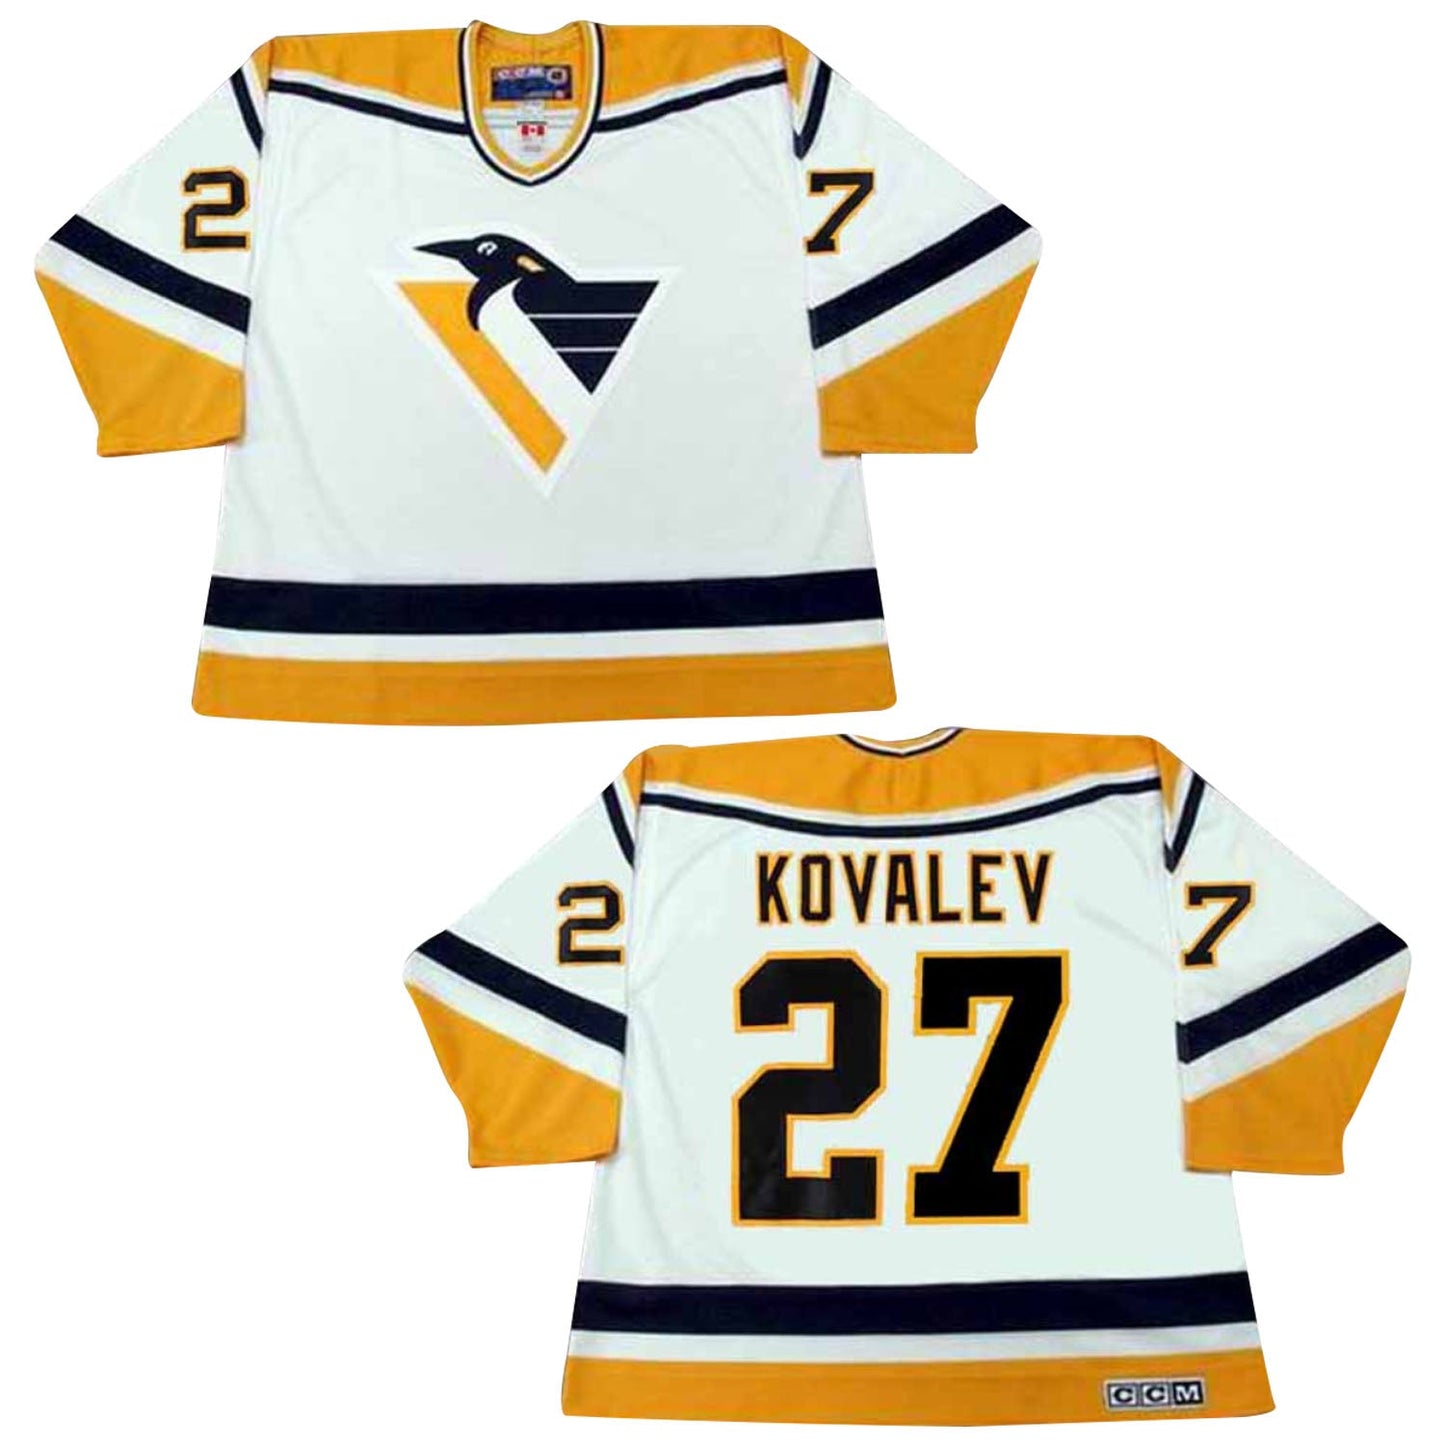 NHL Alexei Kovalev Pittsburgh Penguins 27 Jersey